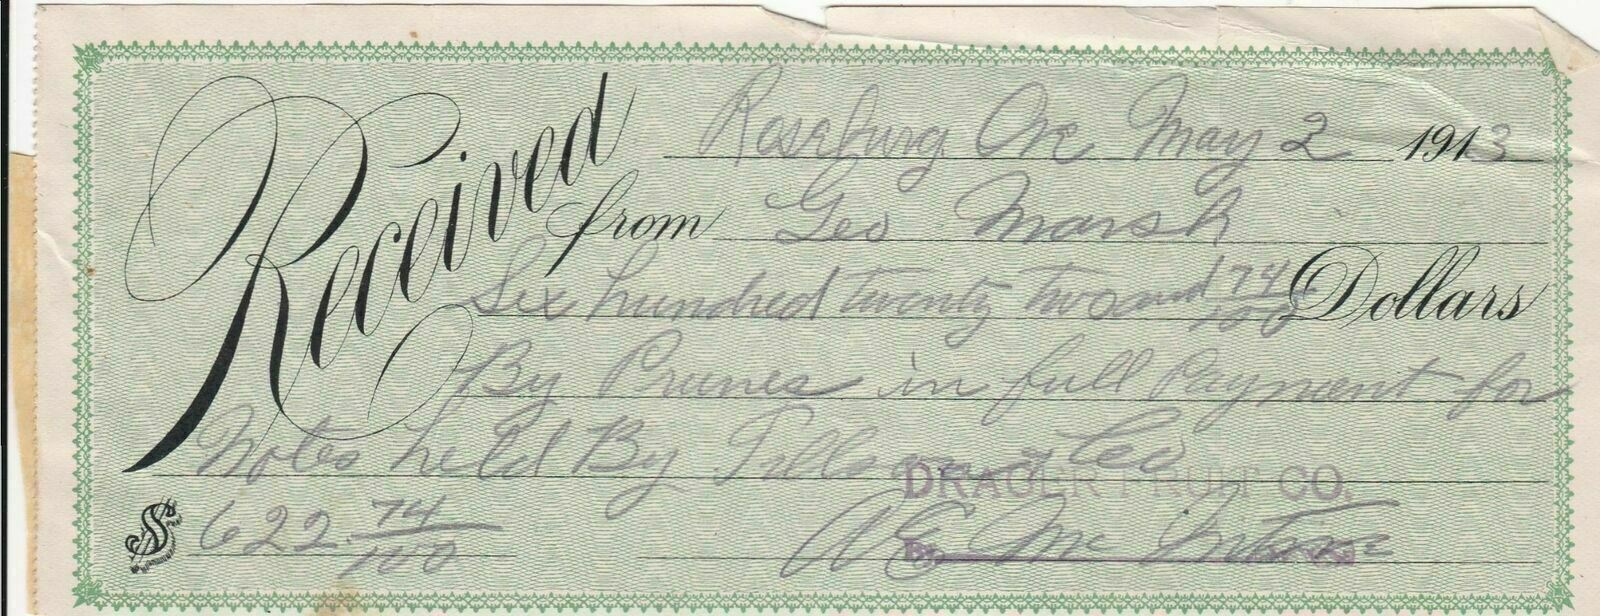 U.S. Recd From George Marsh Roseburg 1913 Drager Fruit Co Paid Receipt Ref 41791